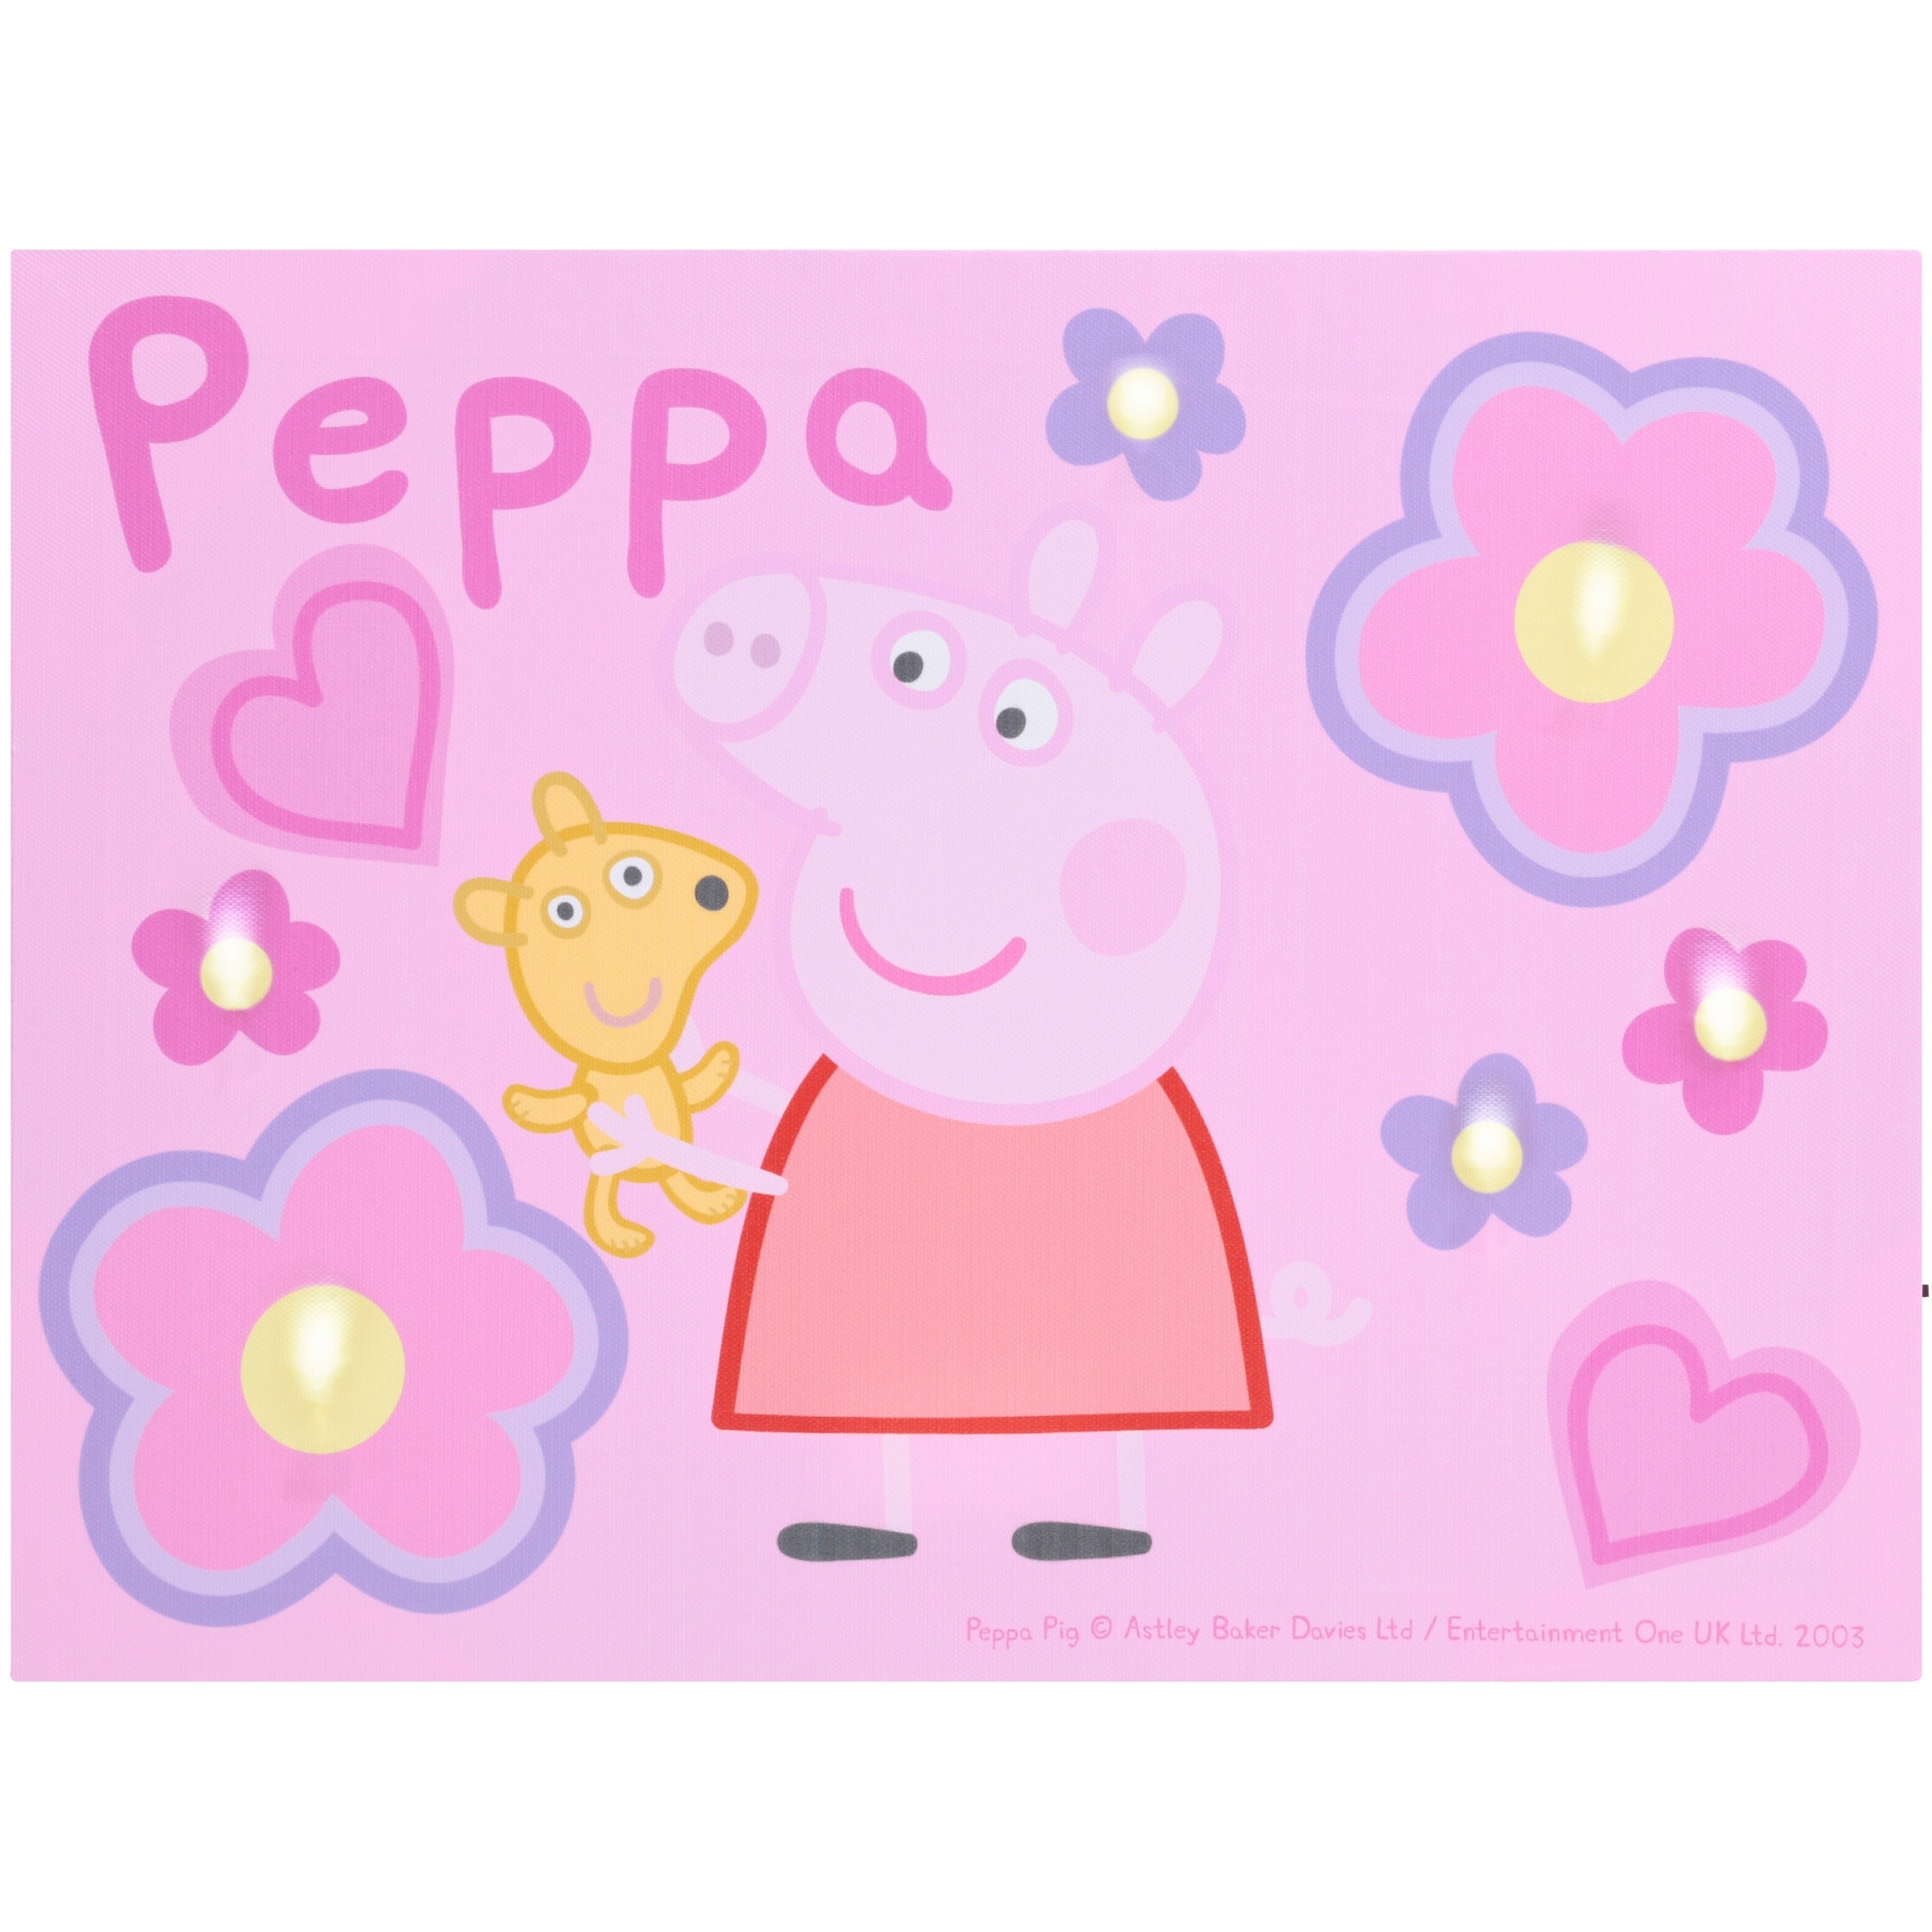 Peppa Pig LED Canvas Wall Art - image 1 of 6